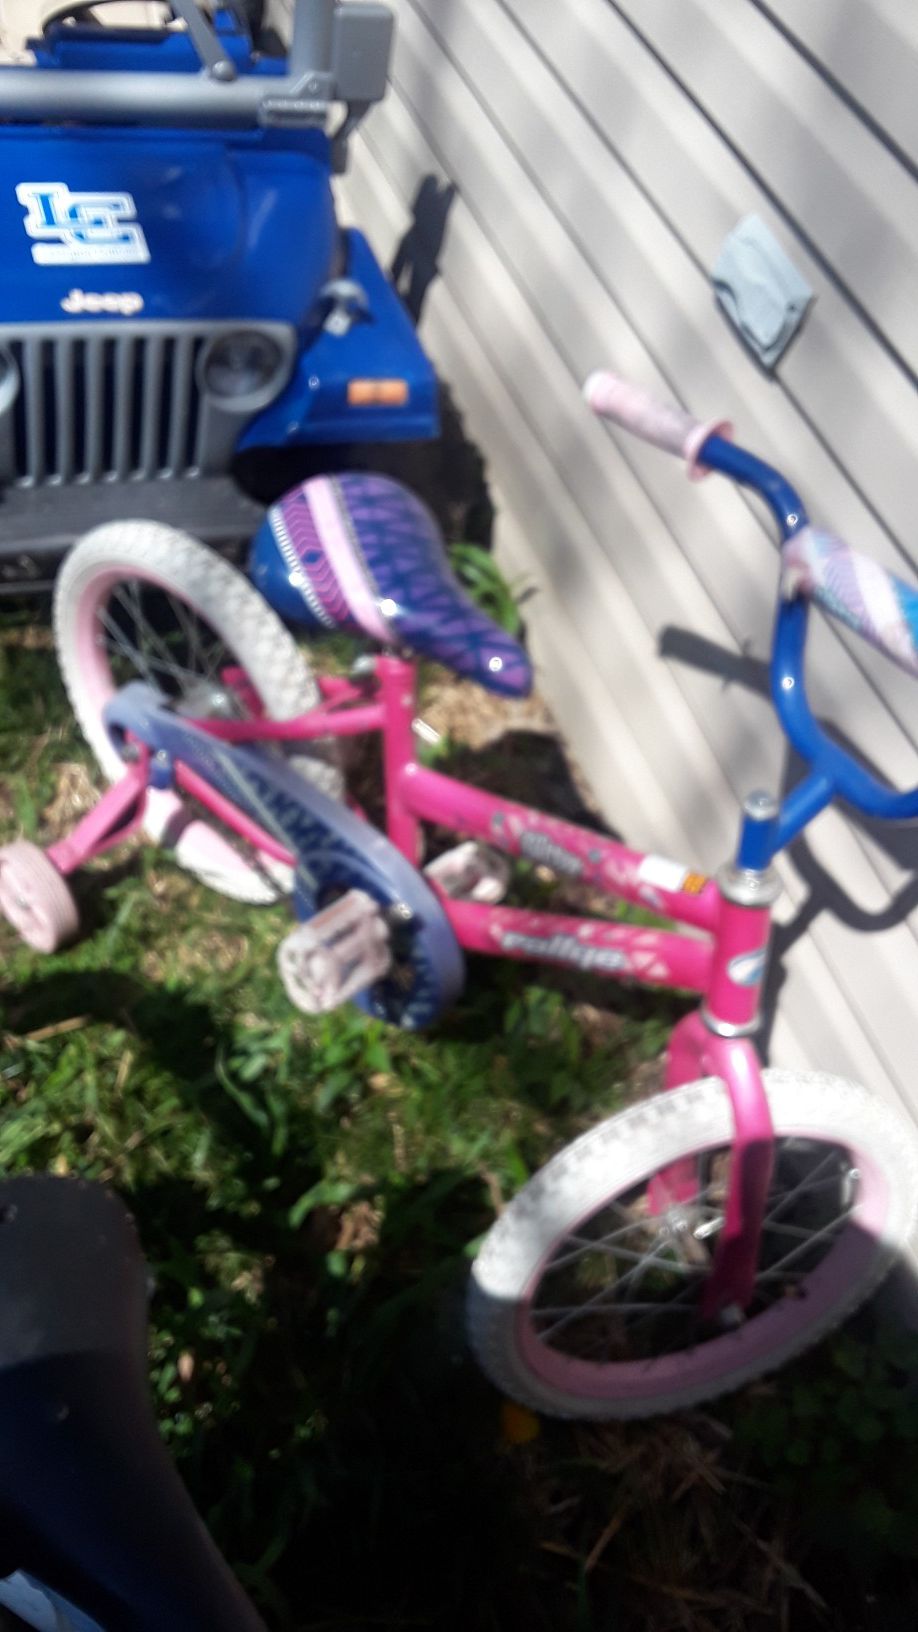 Pink Glider Rellye bike with training wheels